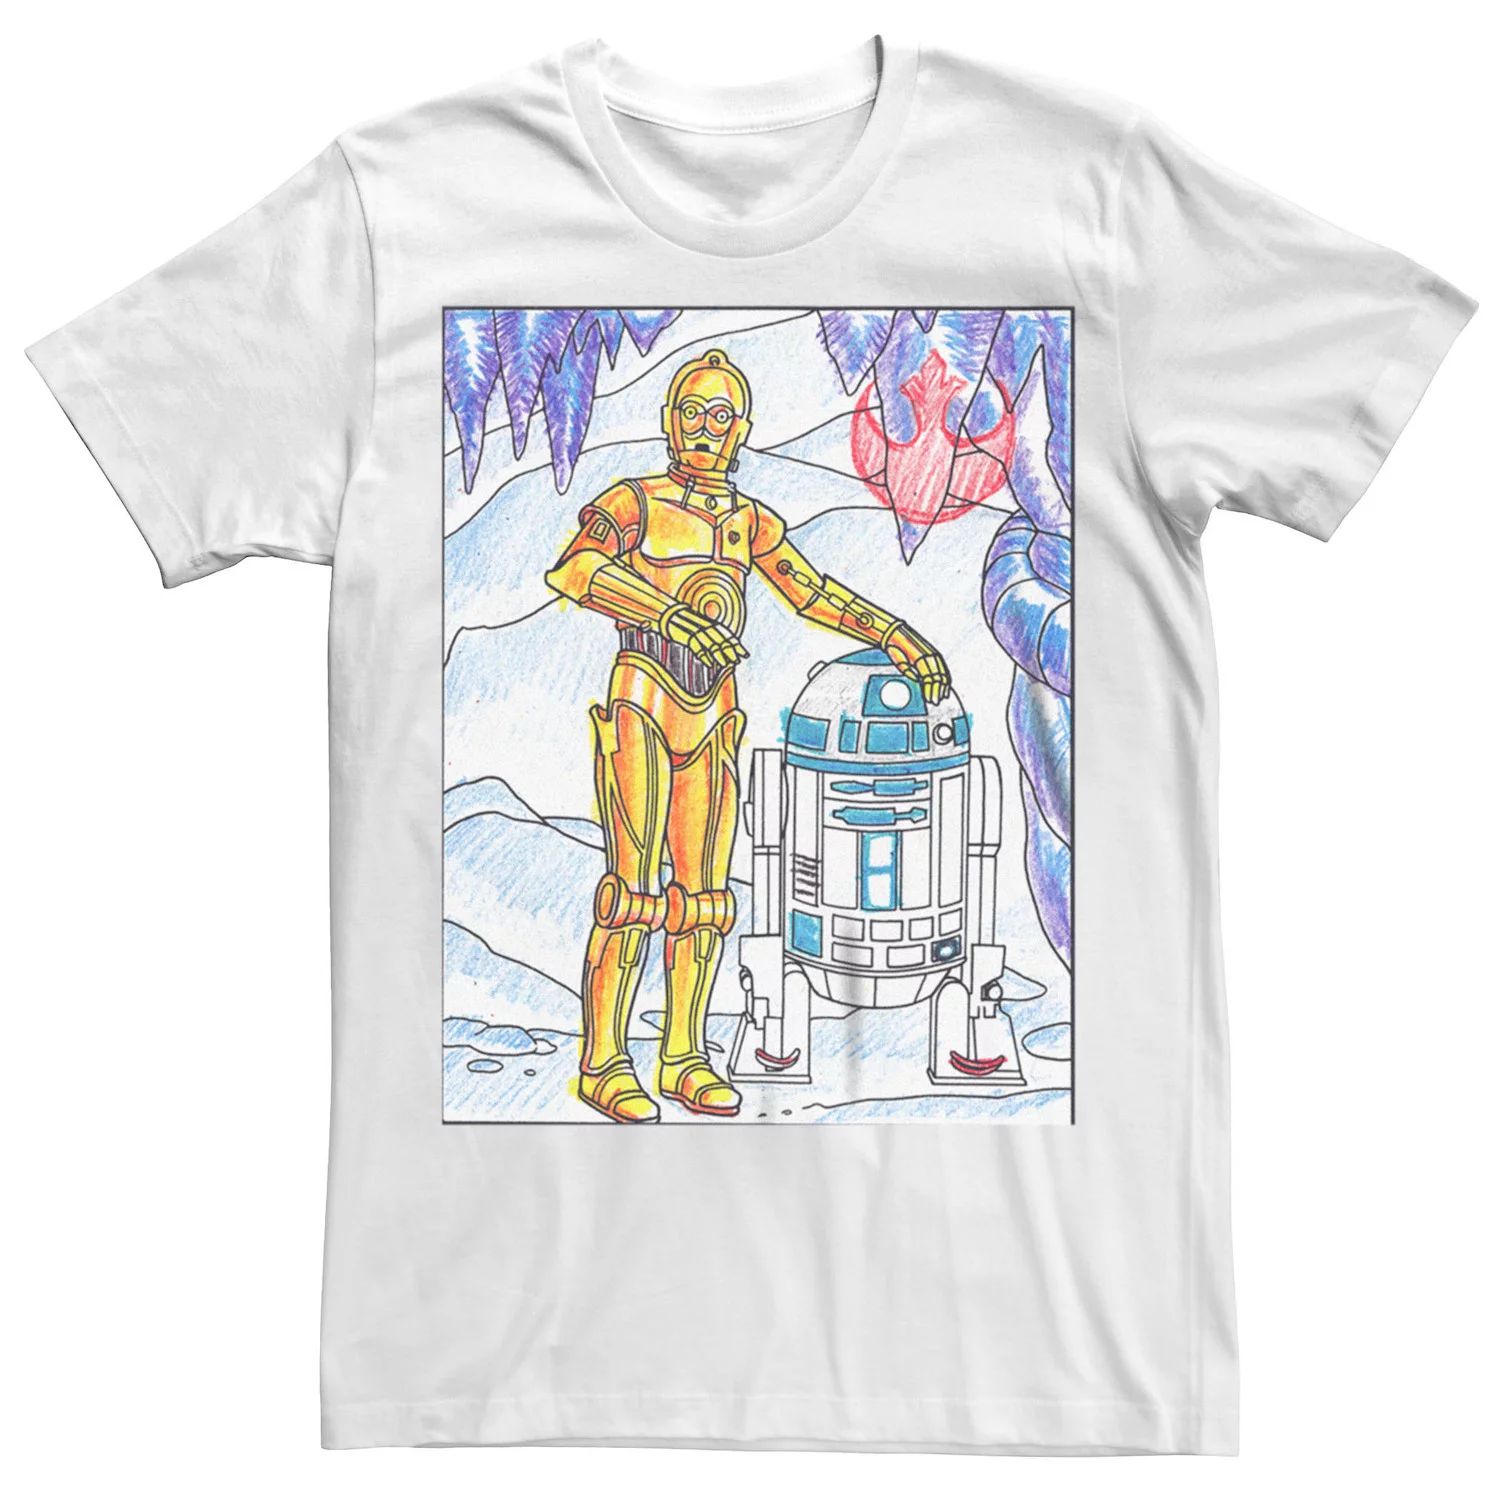 

Мужская футболка с рисунком «Звездные войны: Новая надежда» C-3PO R2-D2 Star Wars